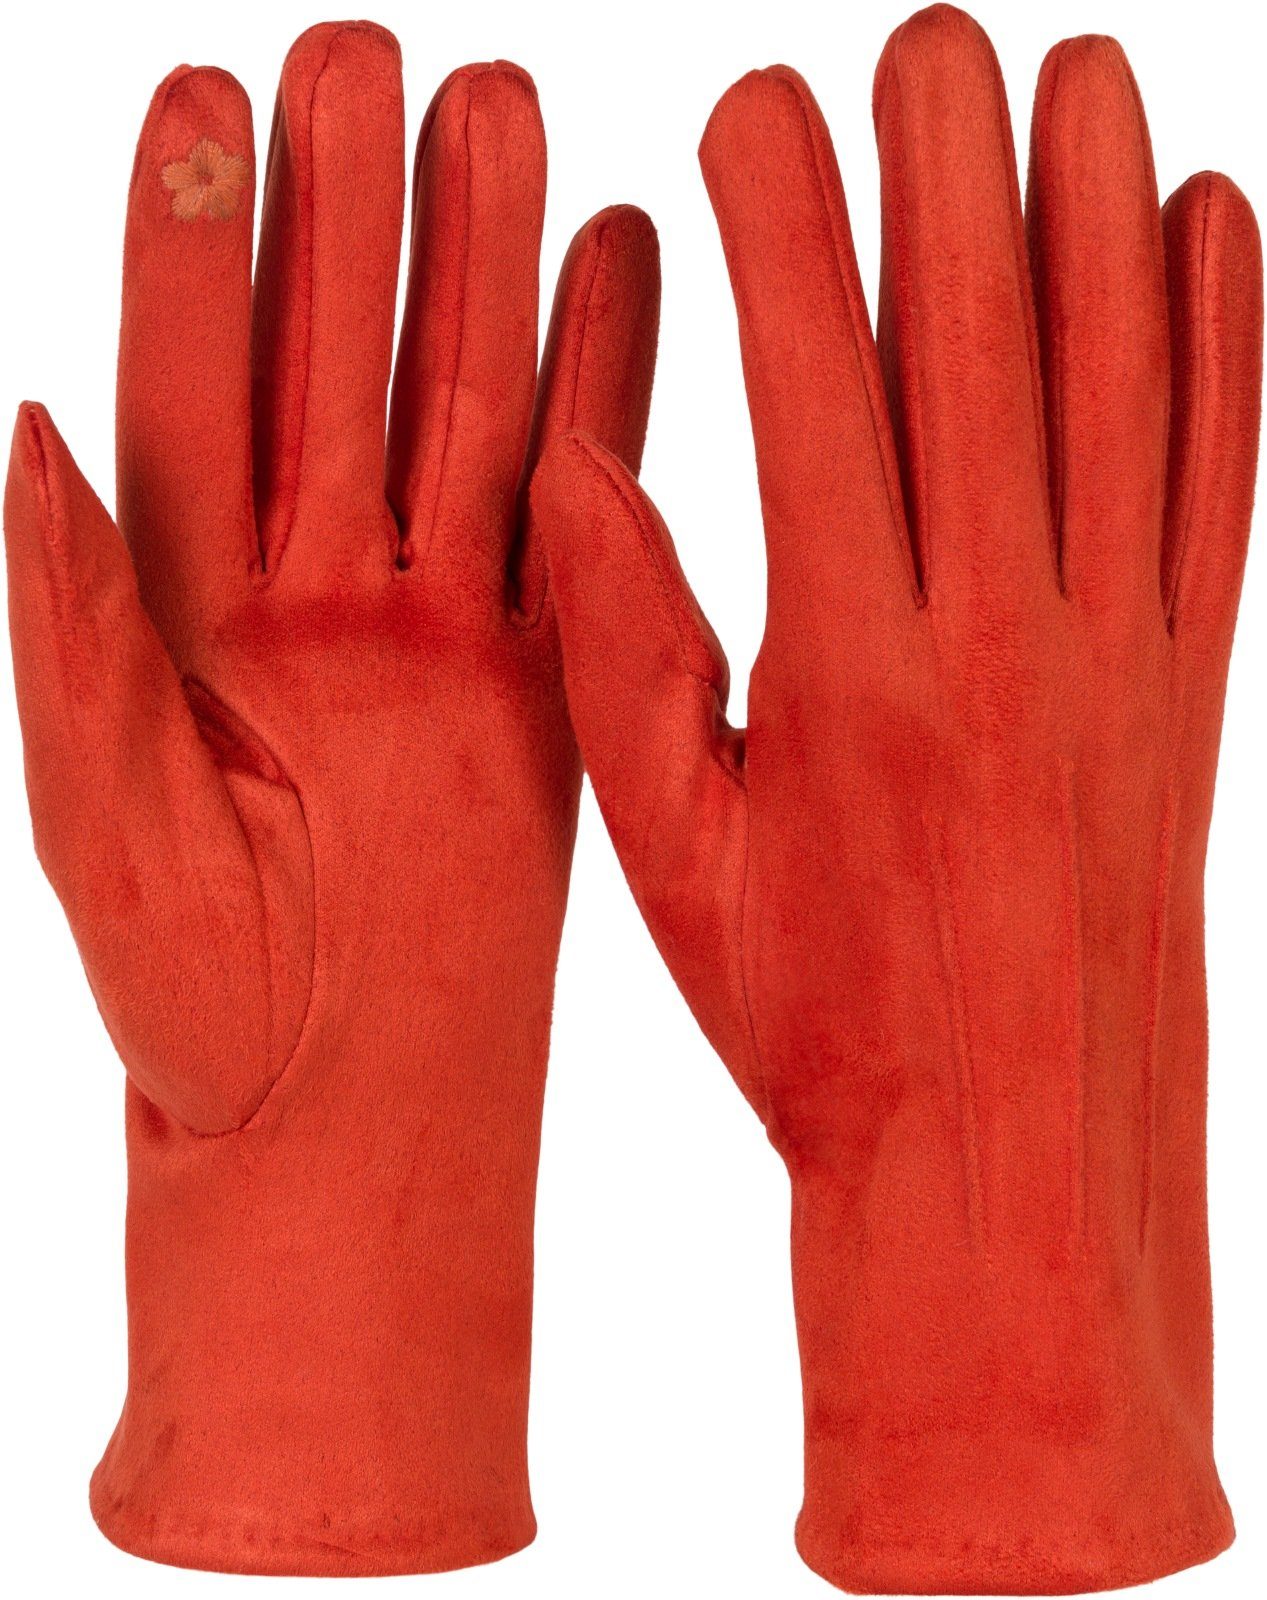 styleBREAKER Fleecehandschuhe Einfarbige Touchscreen Handschuhe Ziernähte Orange